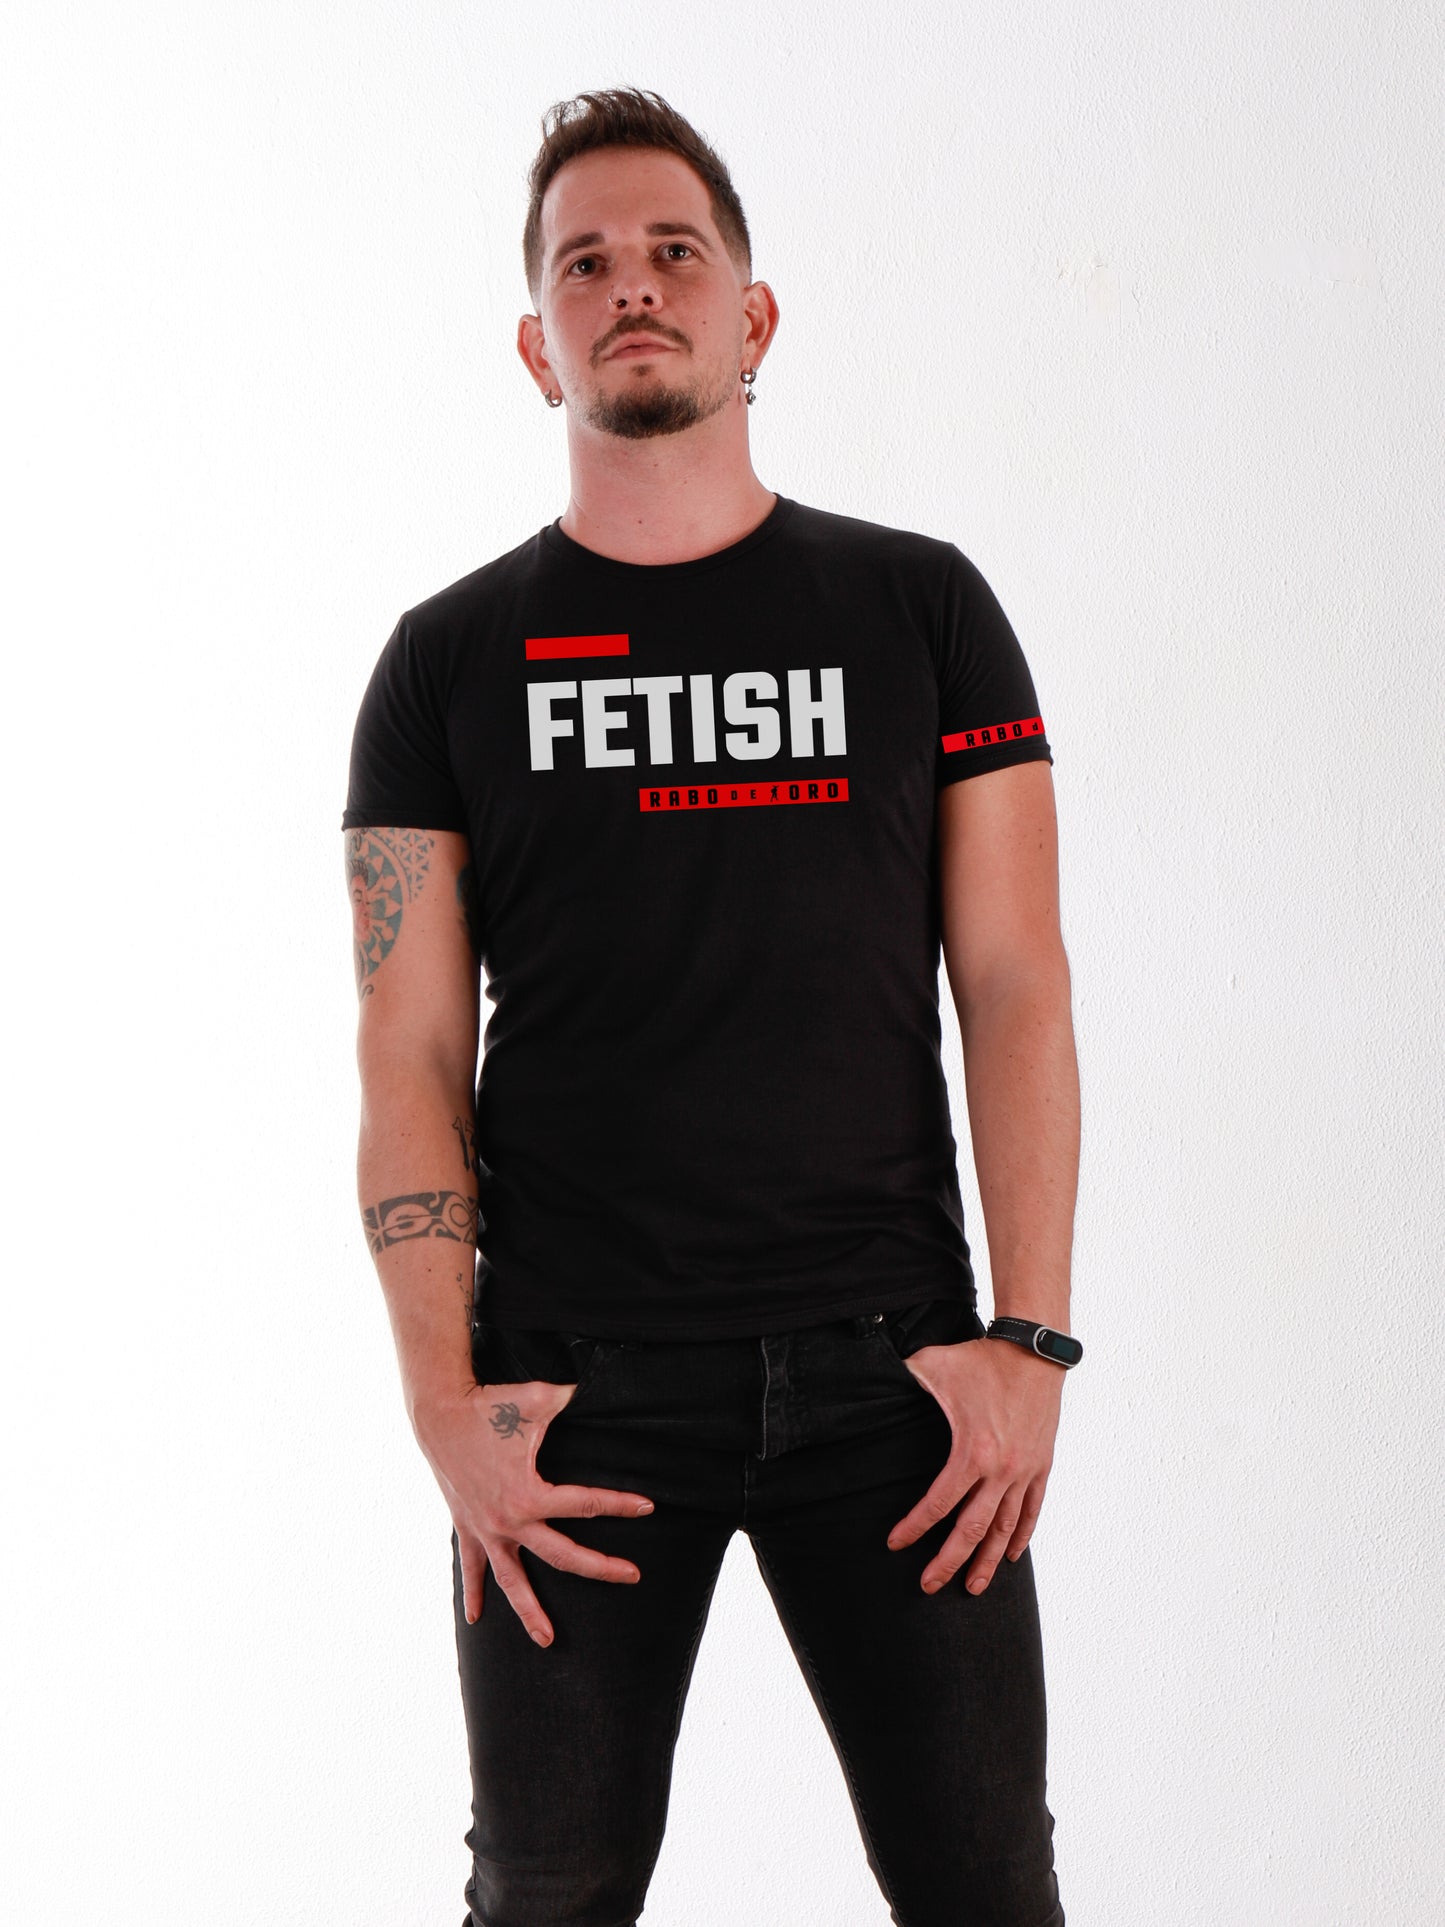 FETISH Black T-Shirt with BDSM Hanky Code details